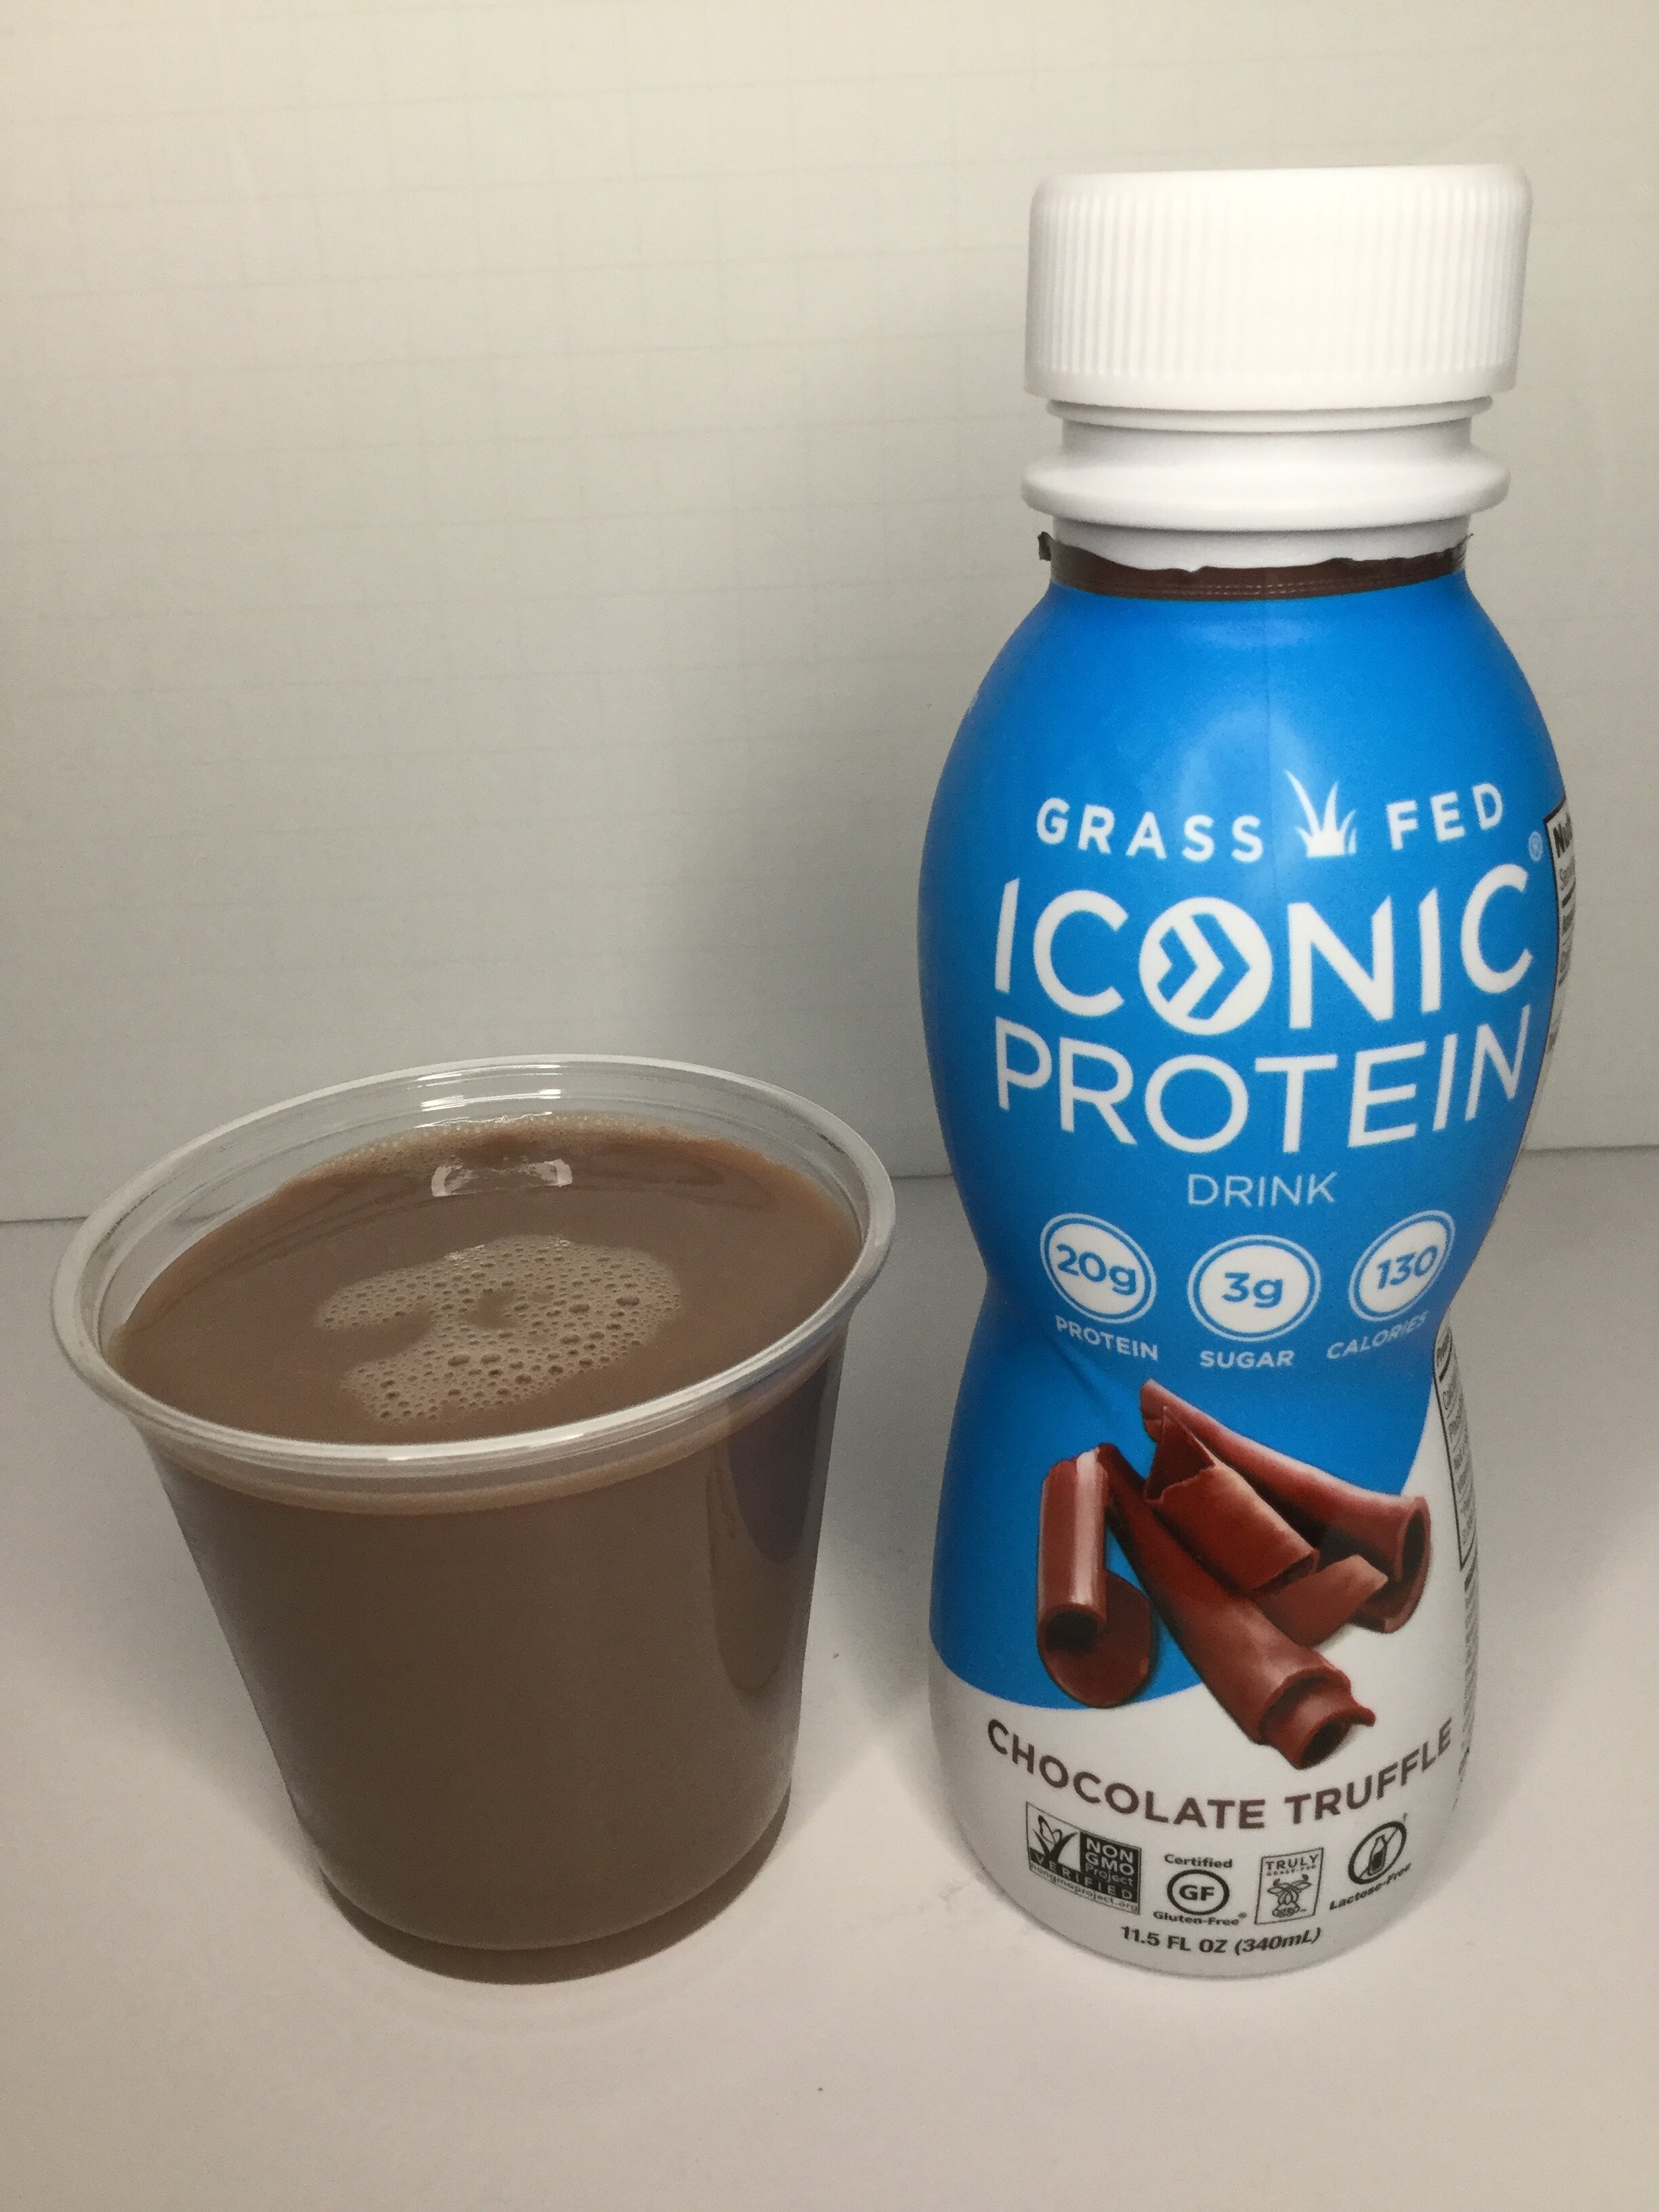 Iconic Protein Drink Chocolate Truffle — Chocolate Milk Reviews